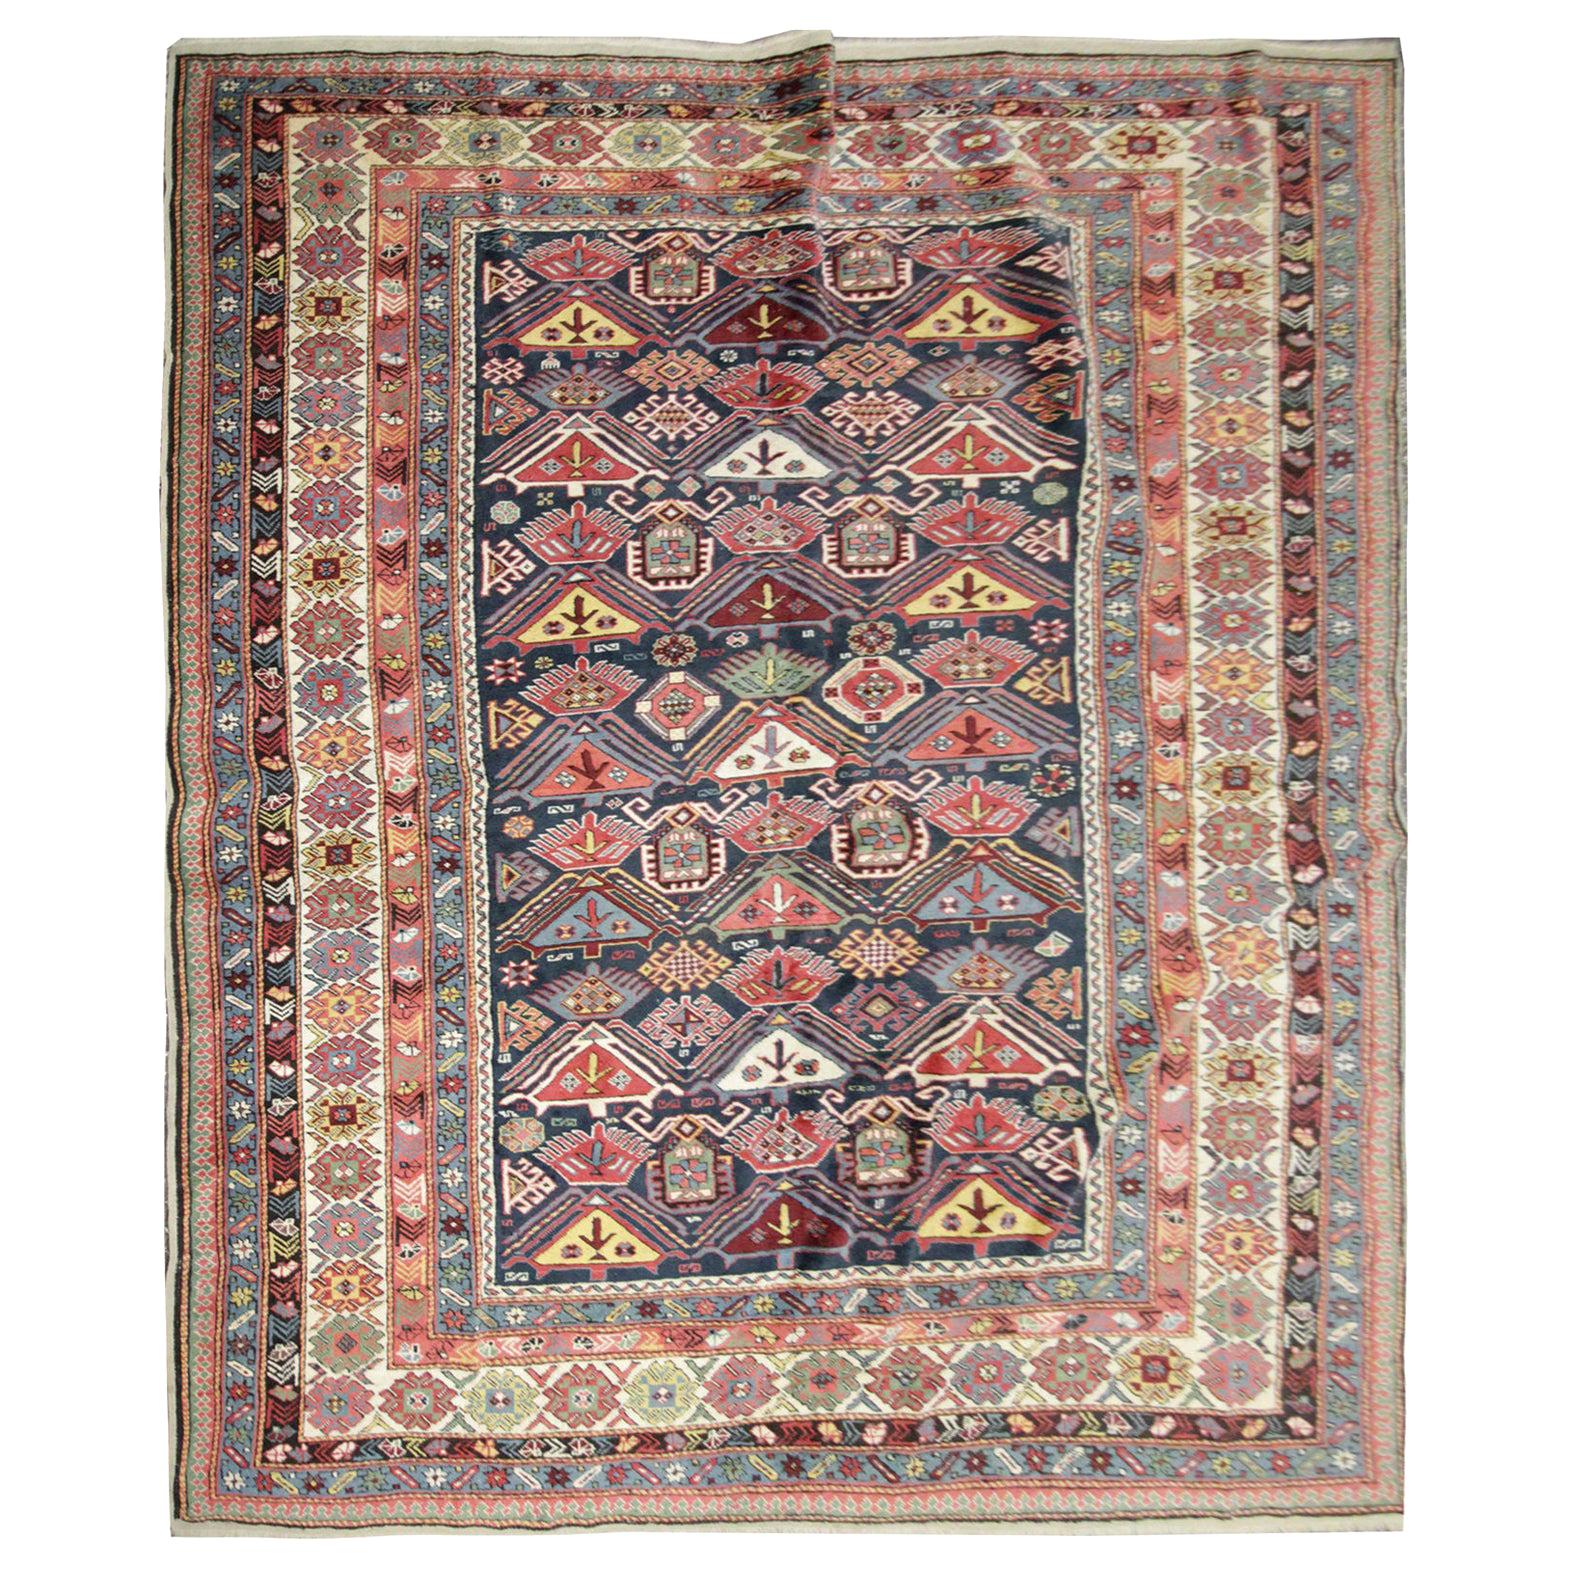 Tapis ancien, tapis artisanal du Caucase oriental, tapis de salon en vente